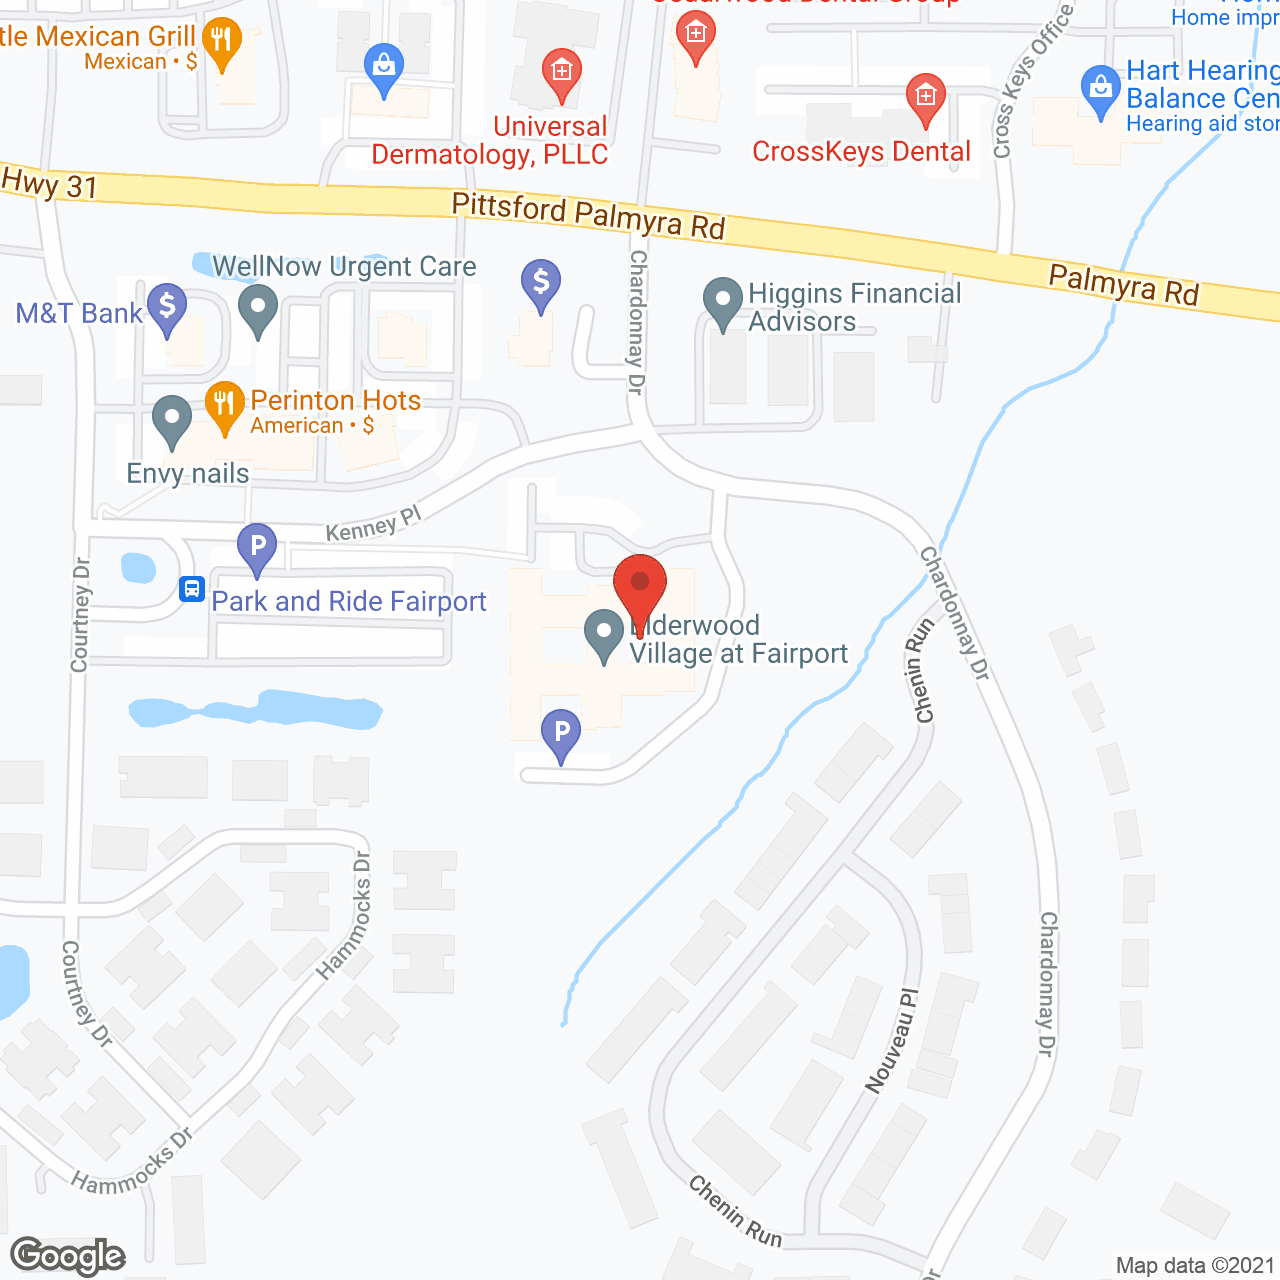 Elderwood Village at Fairport in google map